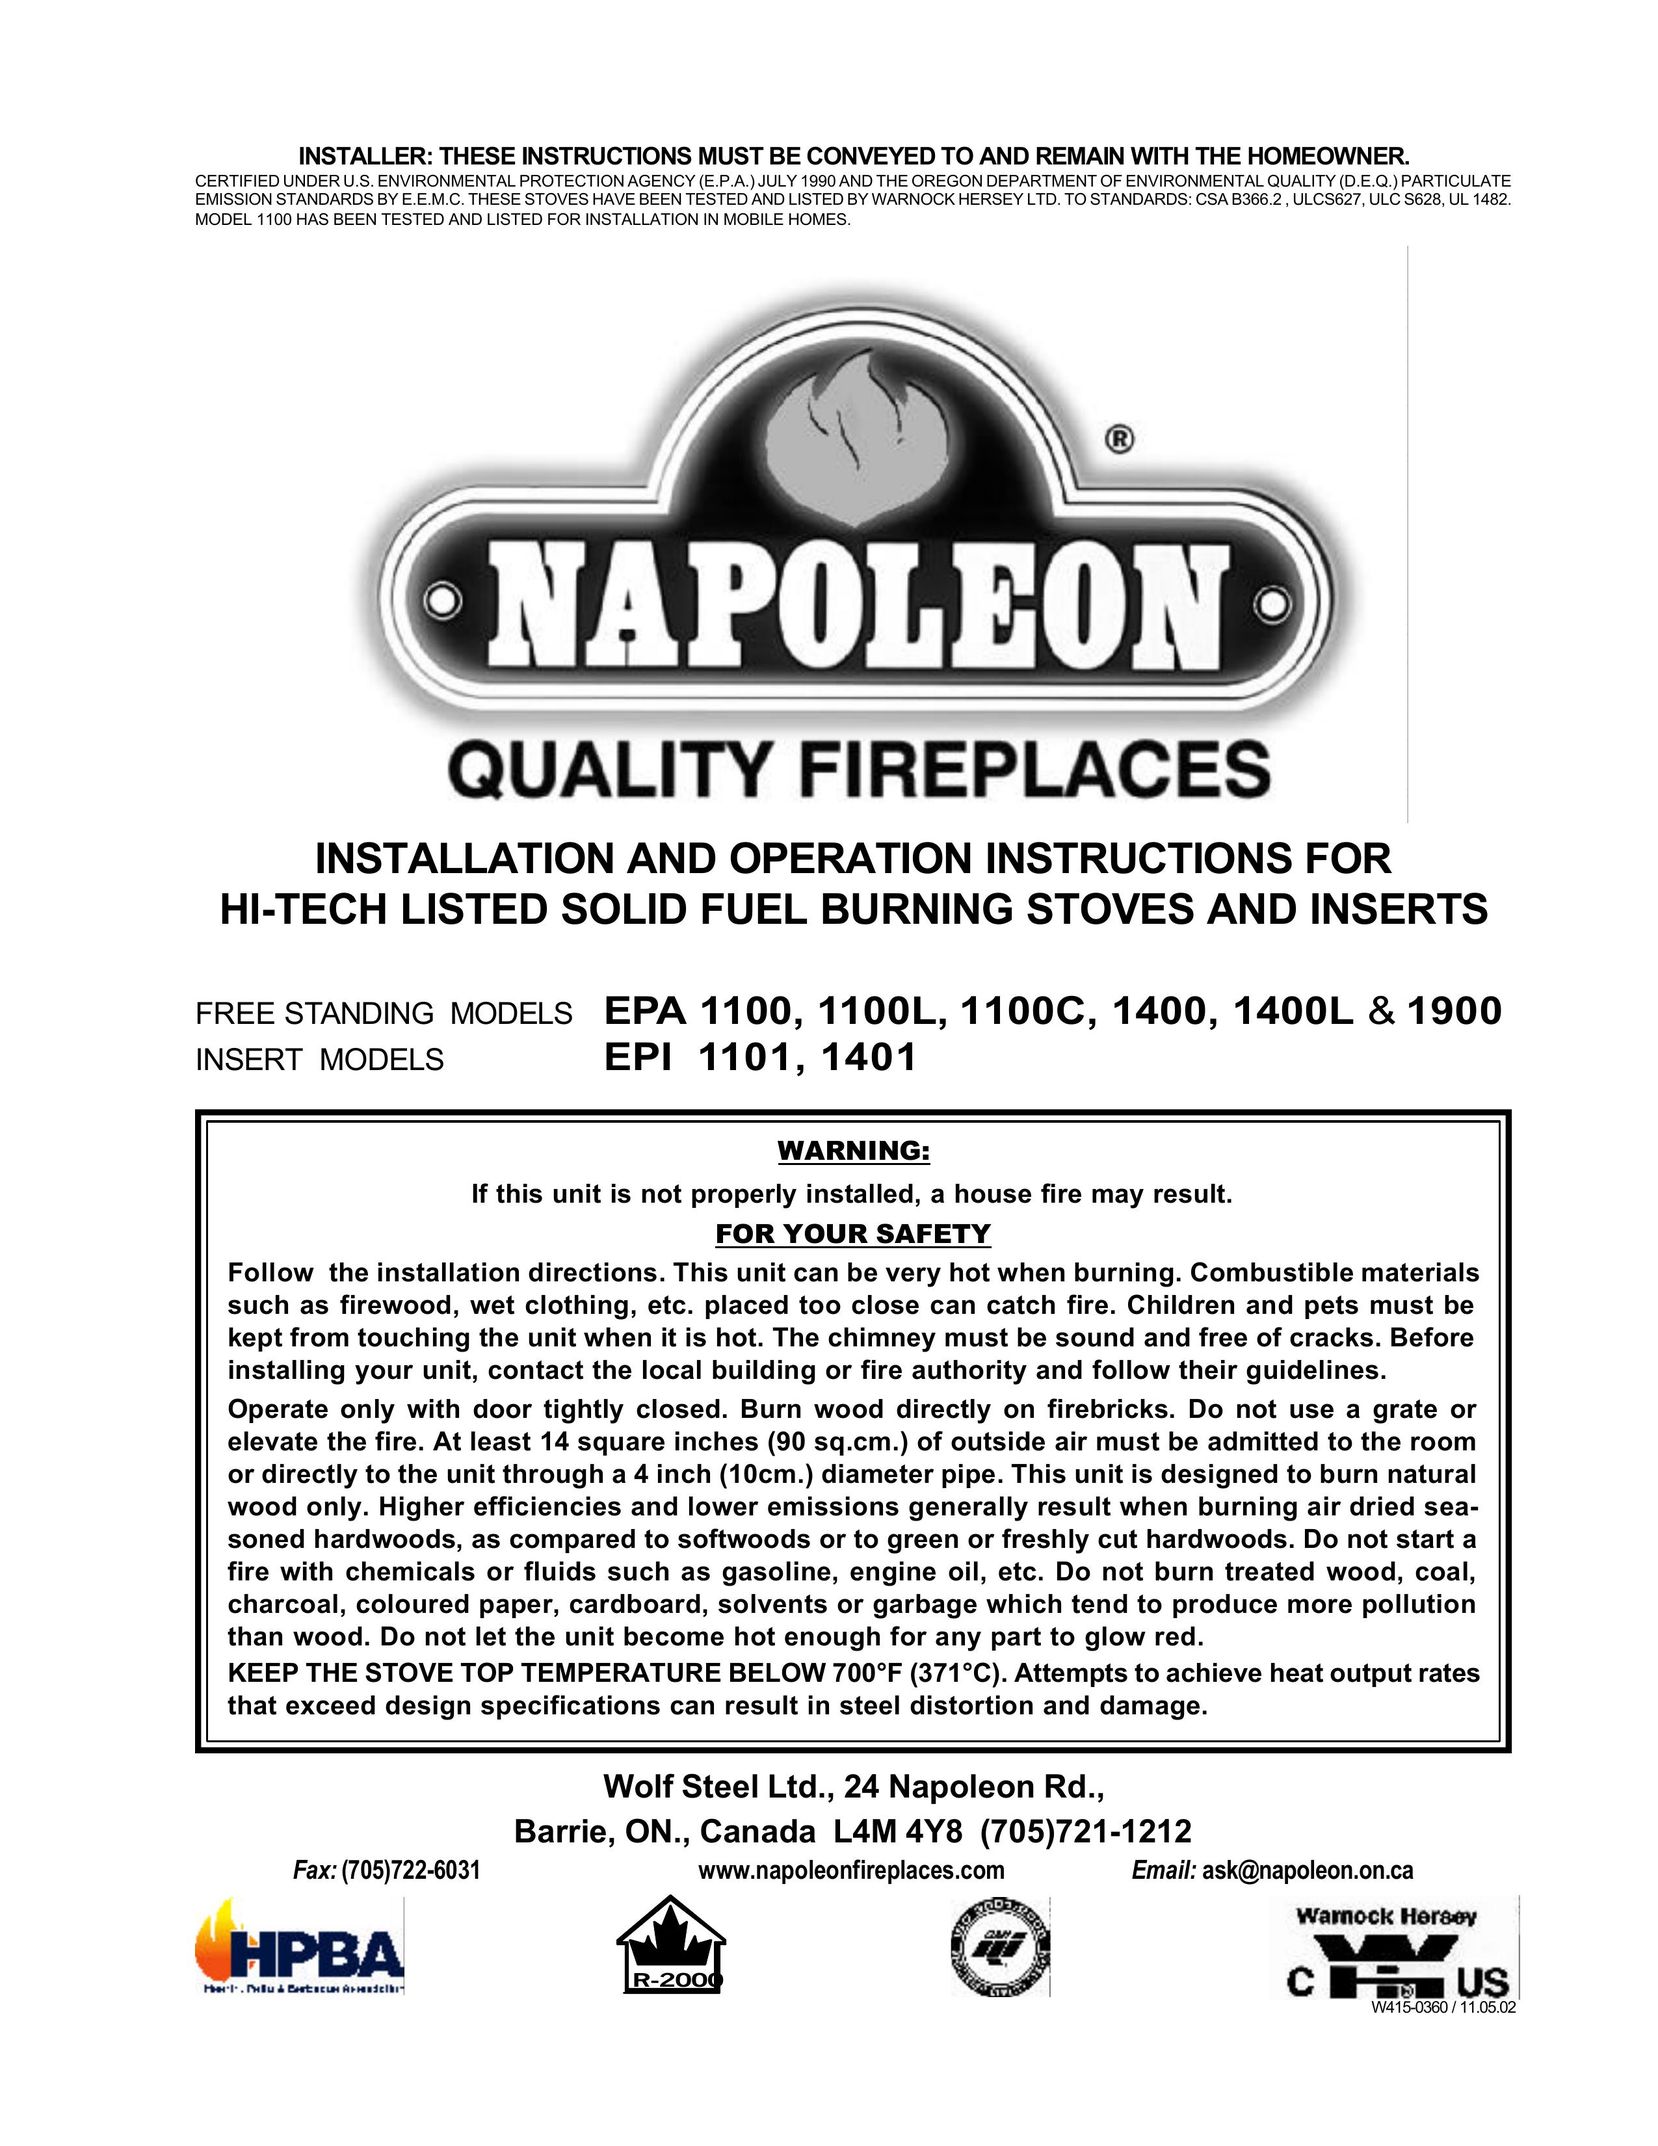 Napoleon Fireplaces EPI 1401 Stove User Manual